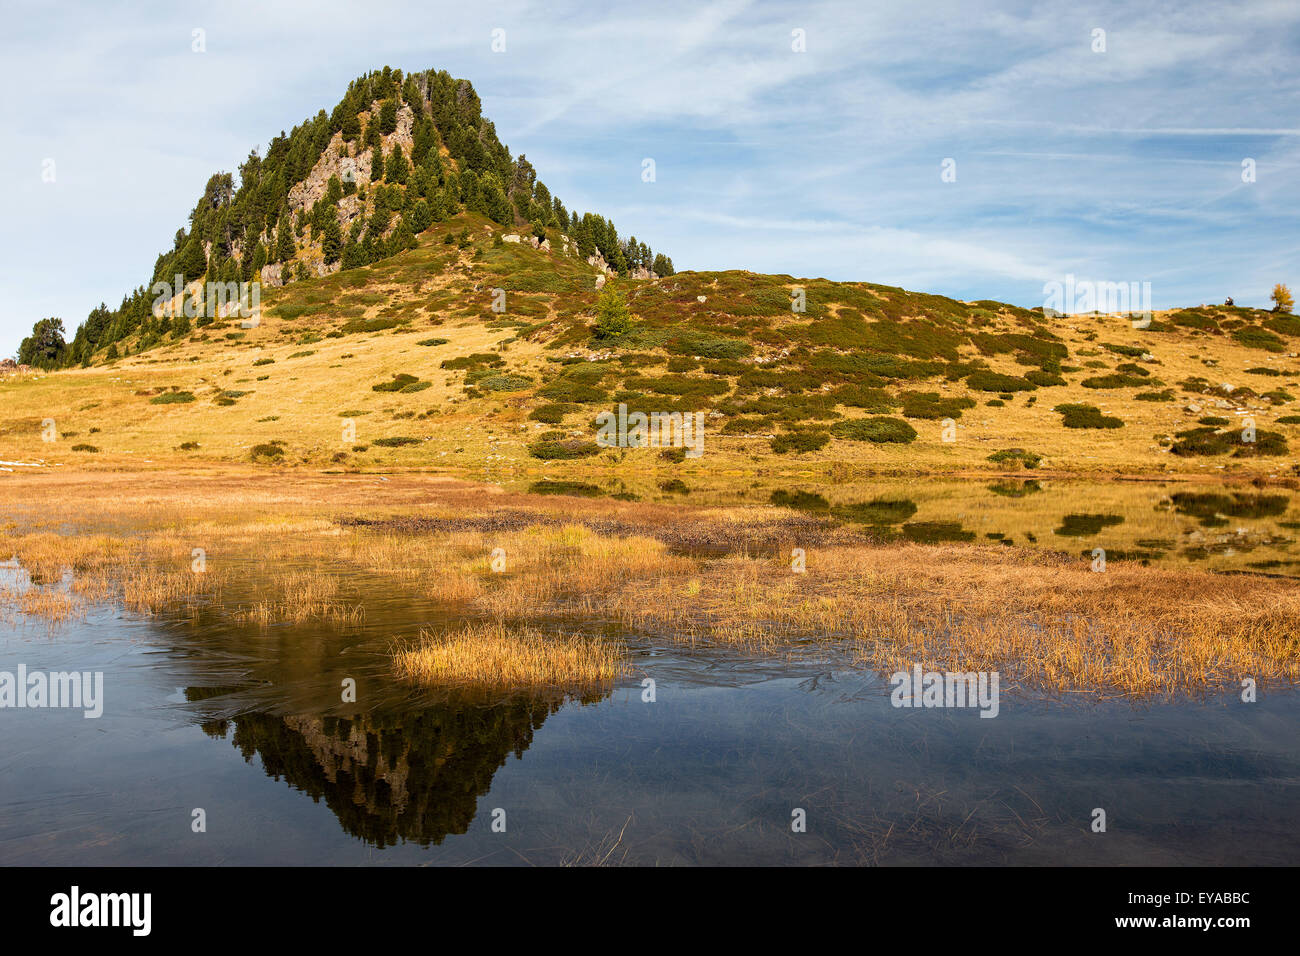 Lake Buse. Lago delle Buse. The Lagorai mountain massif in autumn season. Region Trentino. Italian Alpa. Europe. Stock Photo